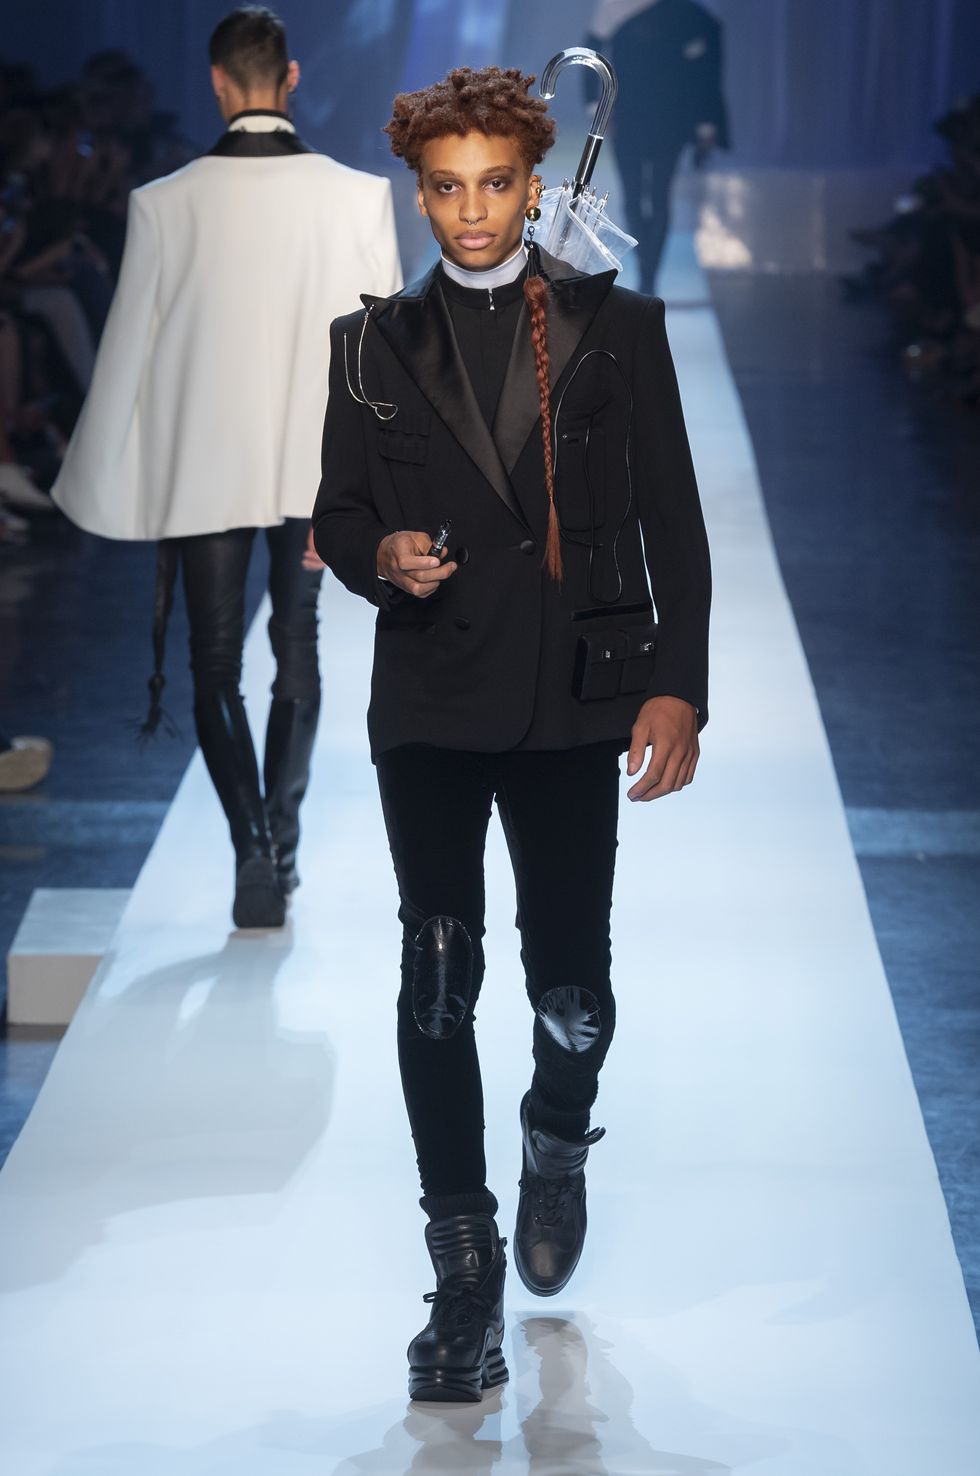 Jean Paul Gaultier Haute Couture FW 2018/19